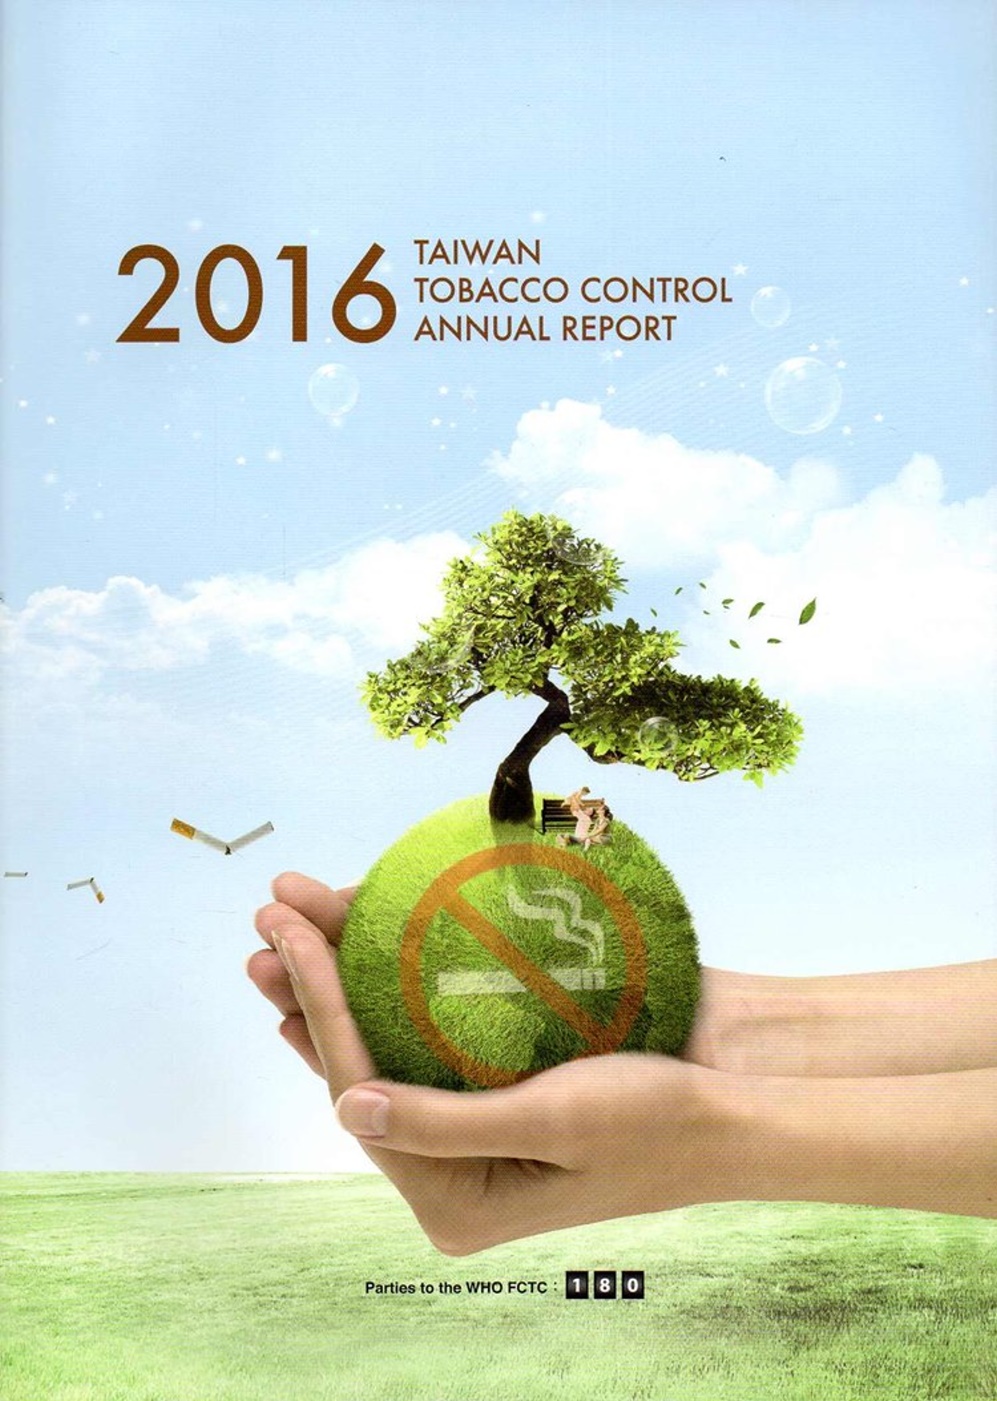 2016年臺灣菸害防制年報-英文版(TAIWAN TOBACCO CONTROL  ANNUAL REPORT 2016)